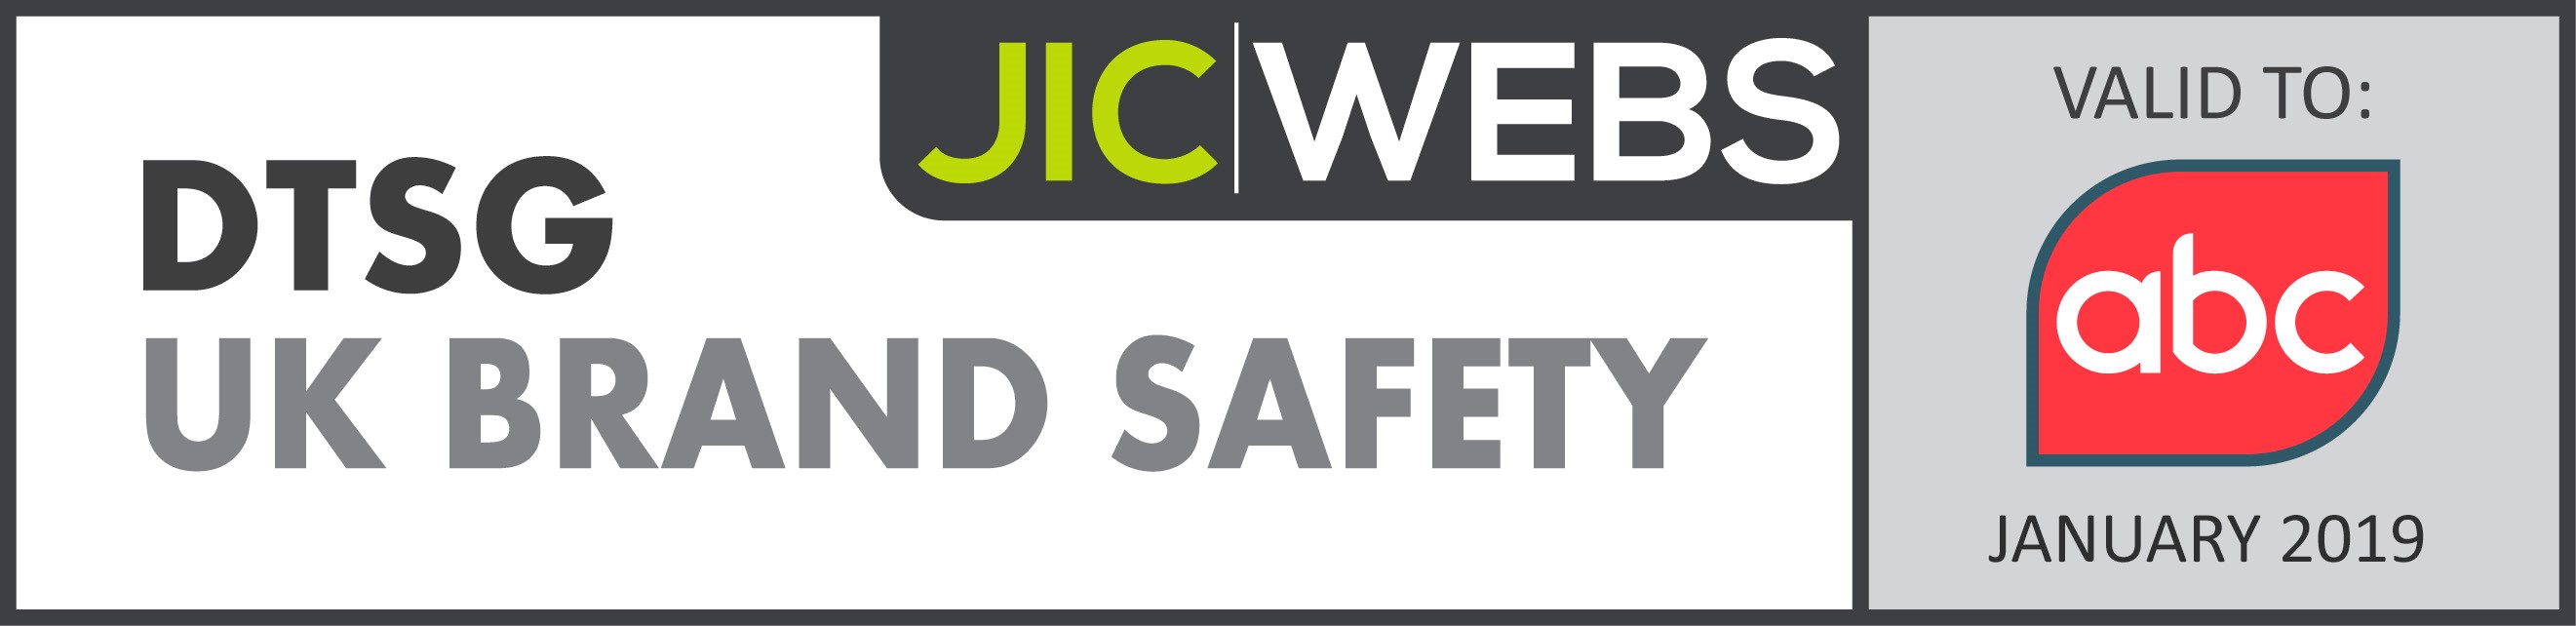 DTSG uk Brand Safety certified